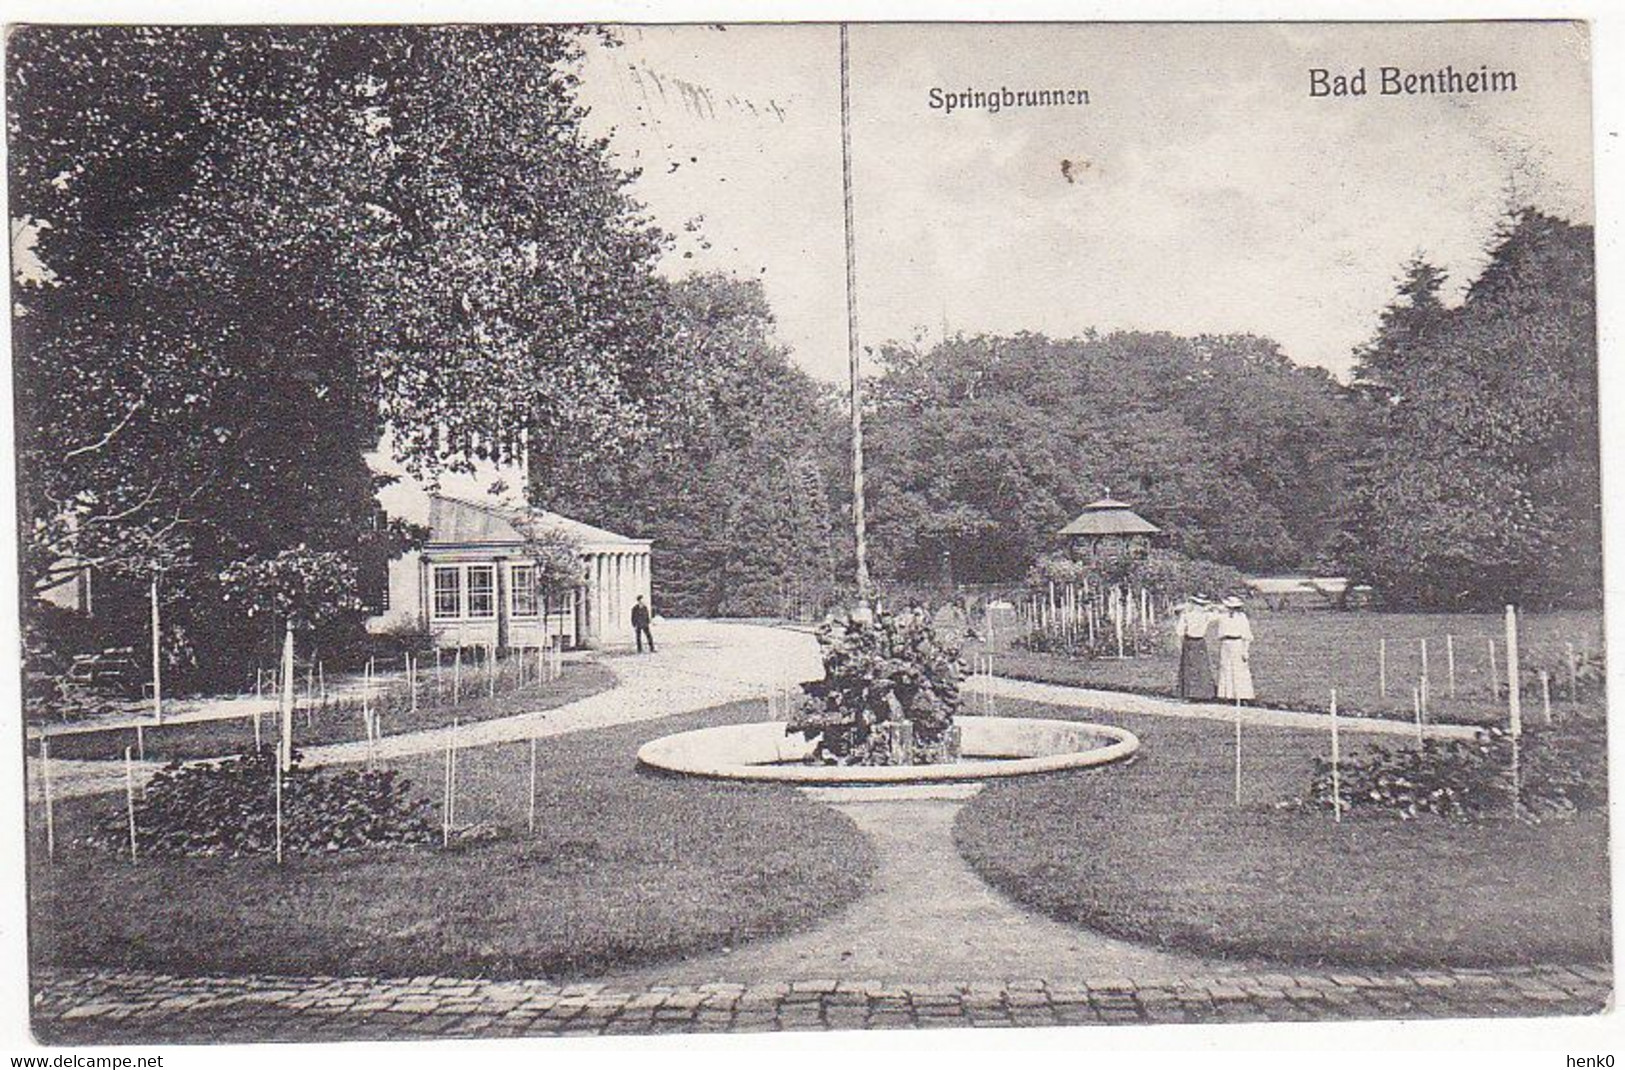 Bad Bentheim Springbrunnen AK KH926 - Bad Bentheim